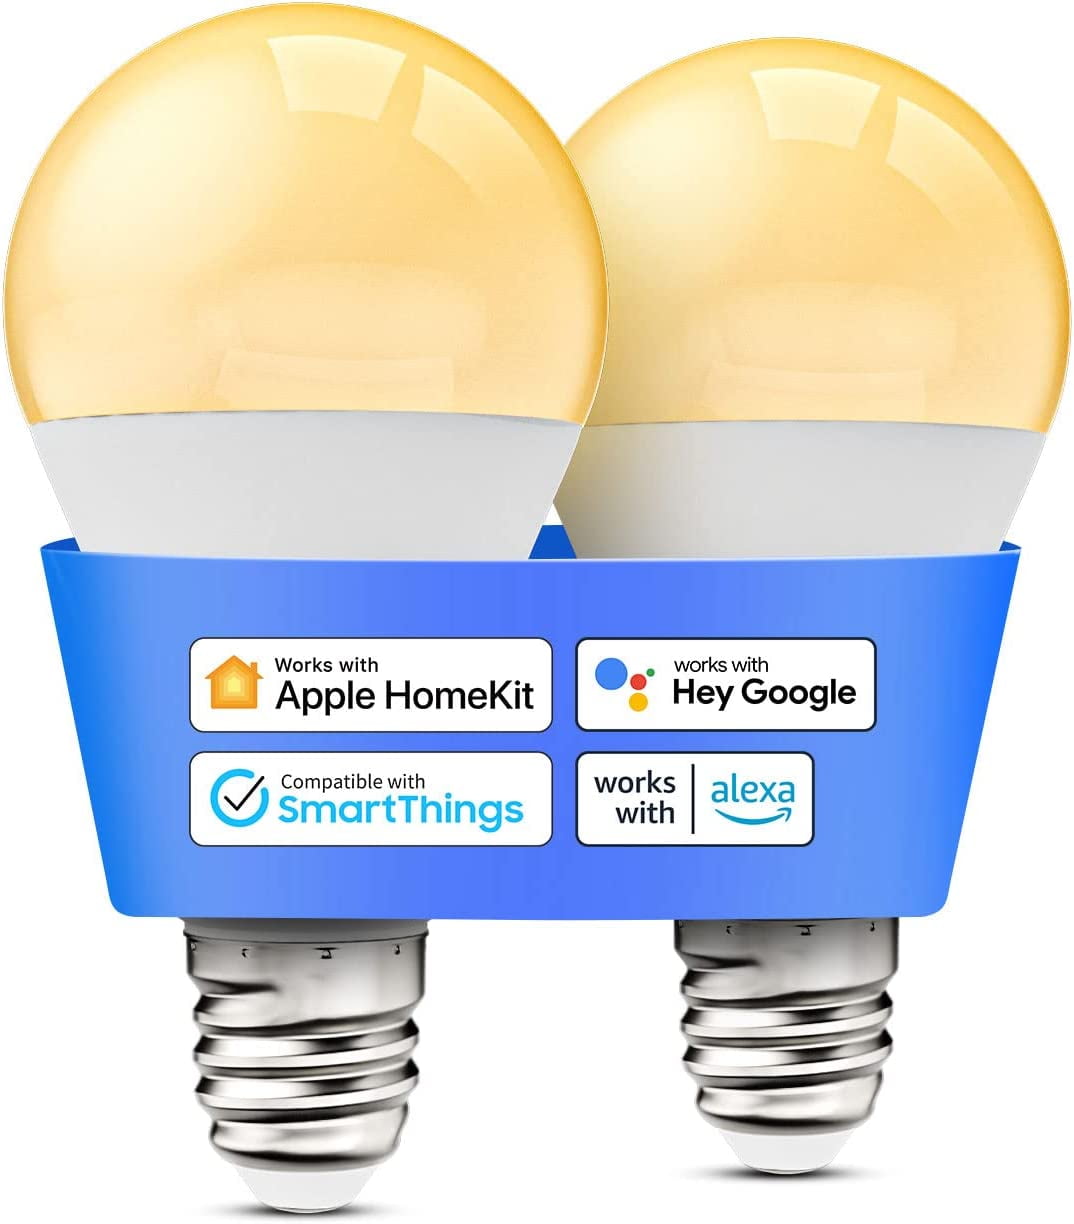 sofa arv ventilator Smart Light Bulb, Dimmable WiFi LED Bulb Compatible with Apple HomeKit,  Siri, Alexa, Google Home, SmartThings, A19 E26 Warm White 2700K, 810 Lumens  9W 60W Equivalent, No Hub Required, 2 Pack - Walmart.com